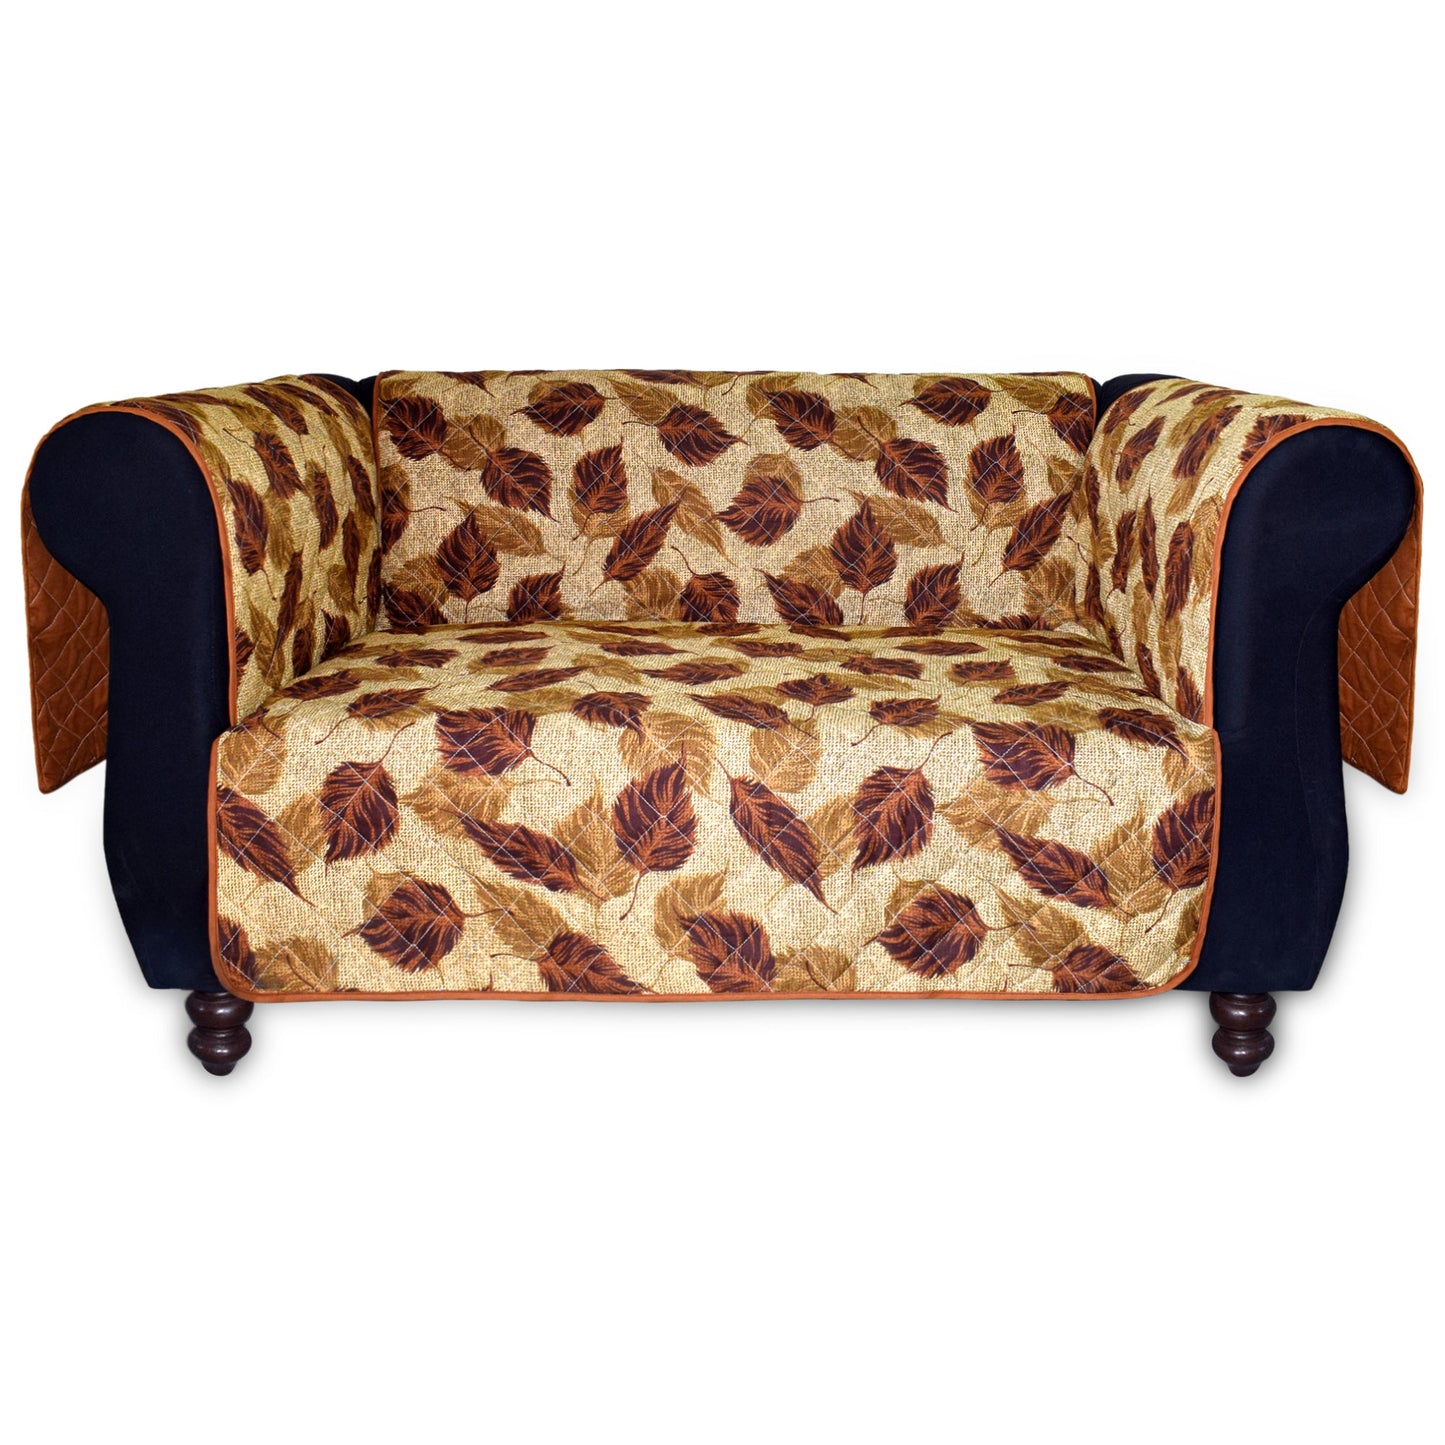 Brown Leaf Reversible Sofa Cover Online in Pakistan